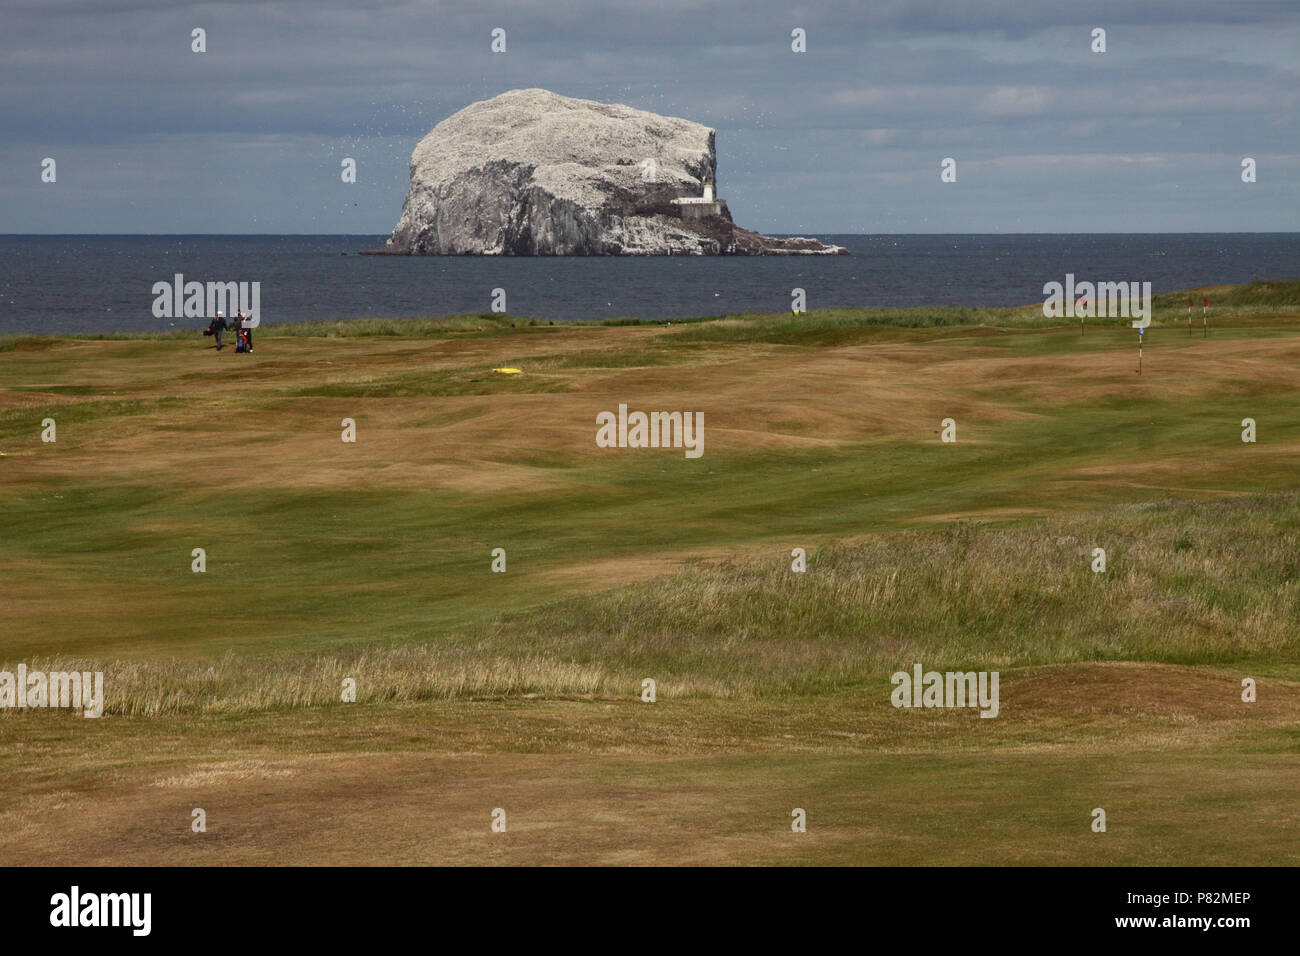 Vogeleiland de Bass Rock in Schotland, Bird Island Die Bass Rock in Schottland Stockfoto